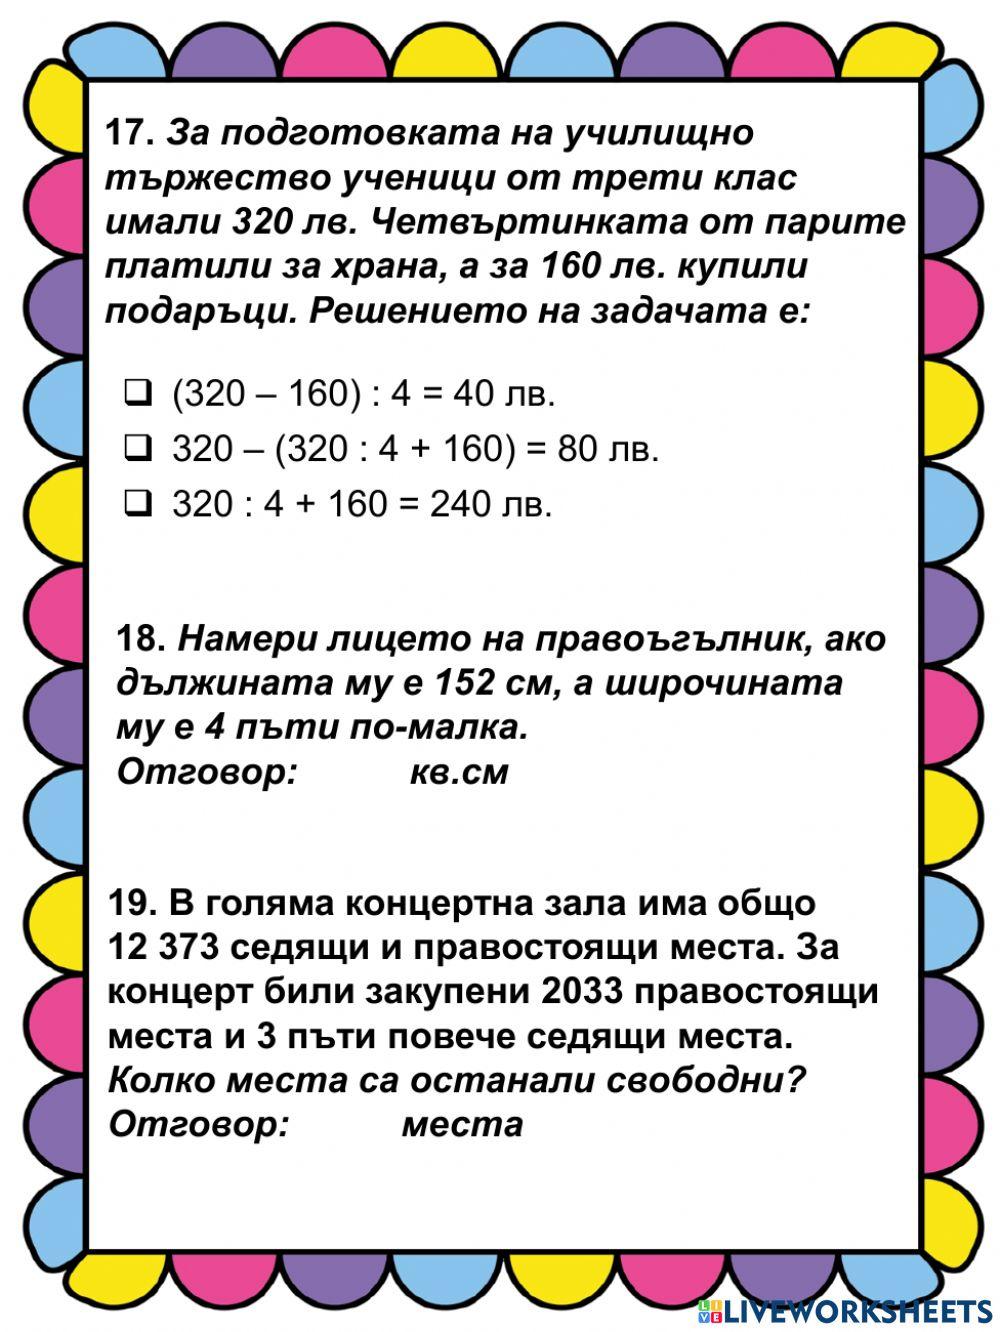 НВО - Математика 2019 г.